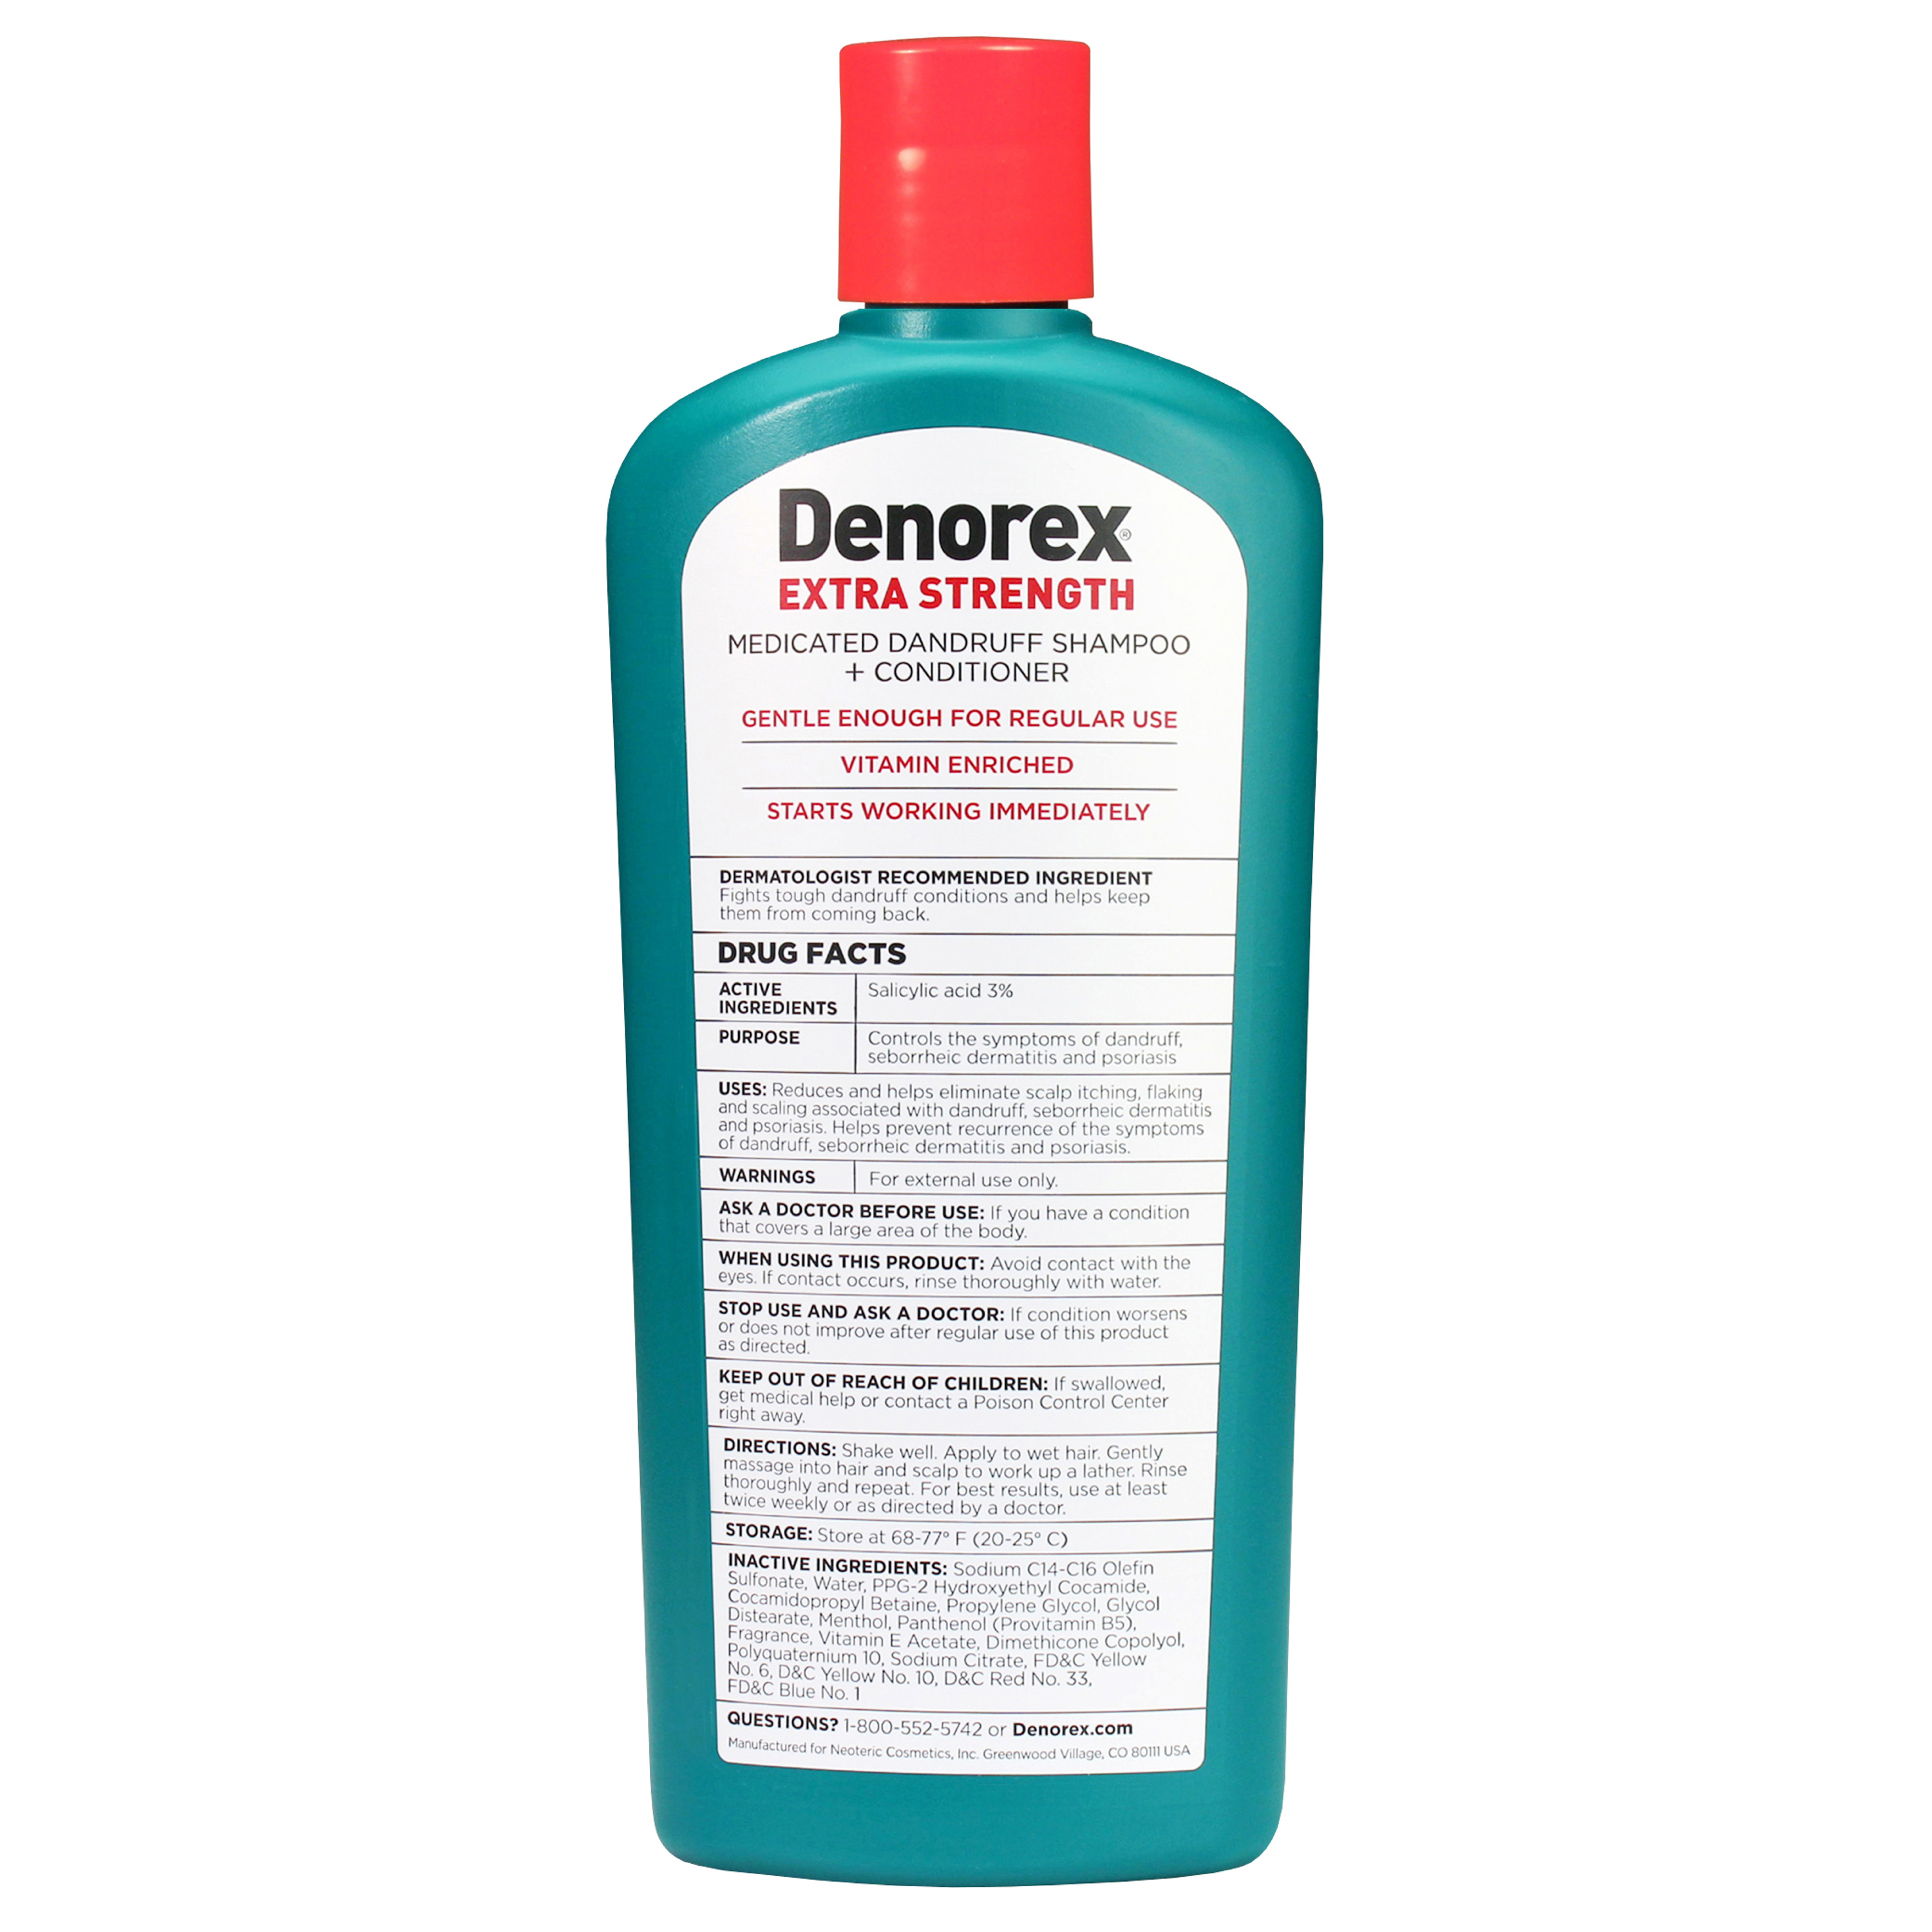 Denorex Extra Strength Medicated Dandruff Shampoo and Conditioner, 10 fl oz - image 3 of 9